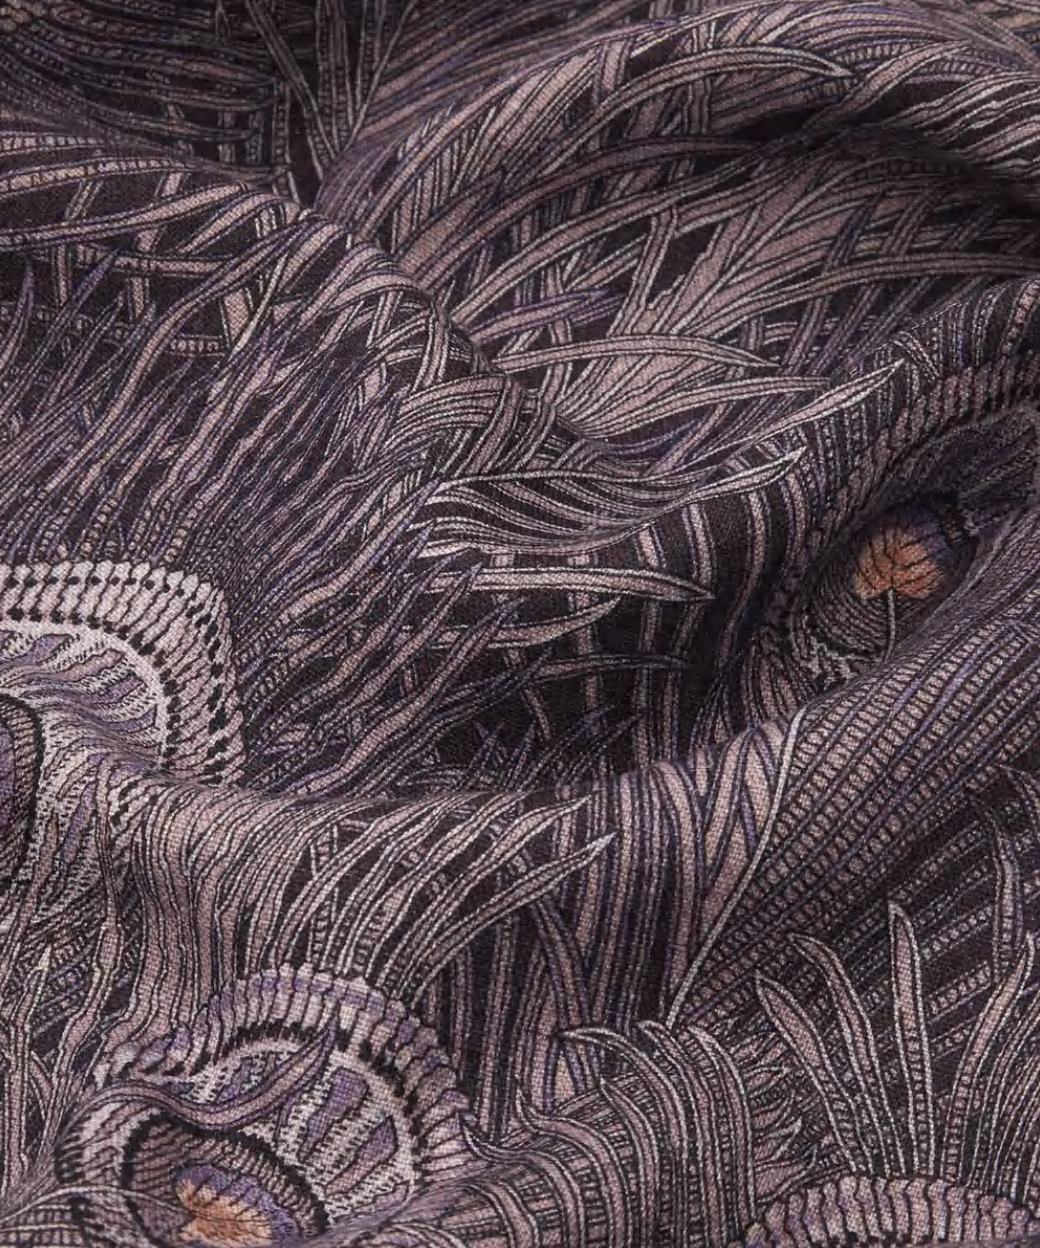 liberty-fabric-interiors-ladbroke-linen-dragonfrly-peacock-feather